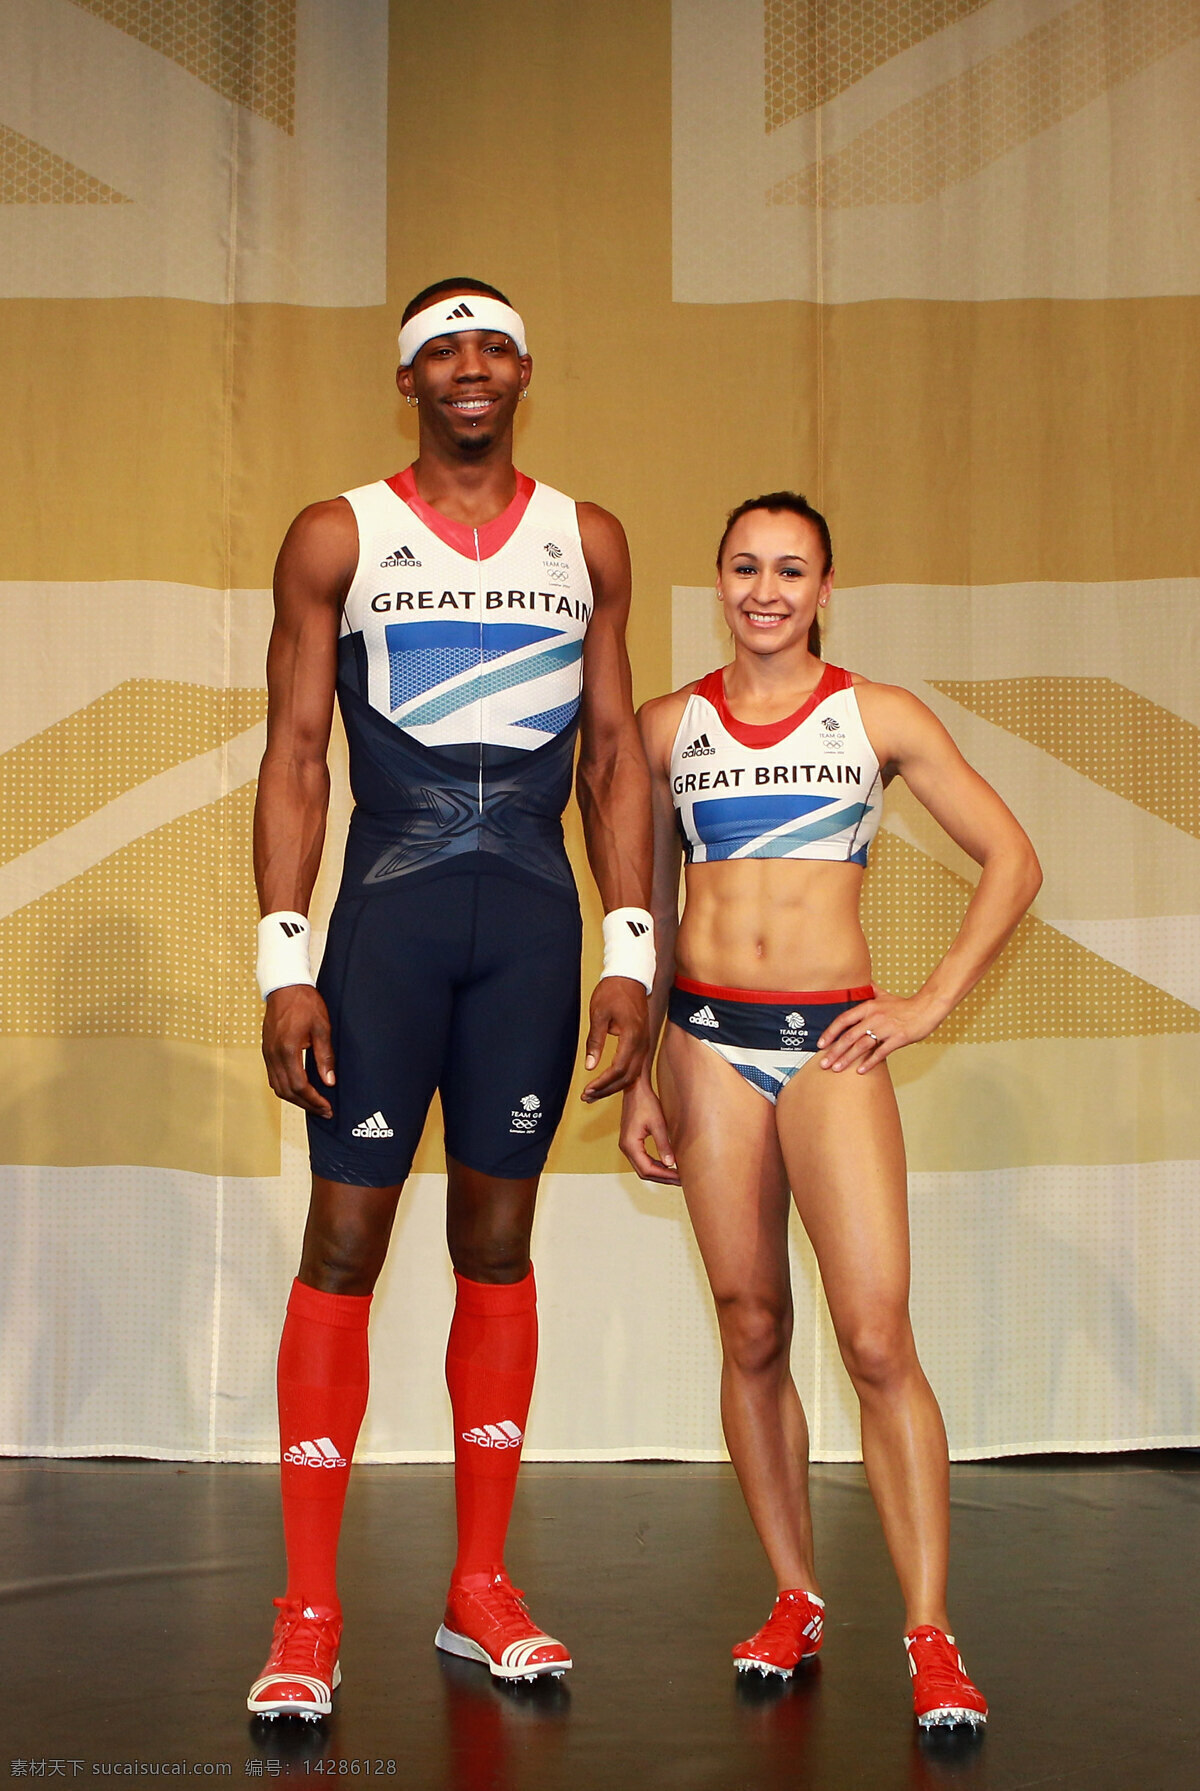 adidas 英国队 奥运 装备 展示 平面广告 英国代表队 奥运装备展示 体育运动 文化艺术